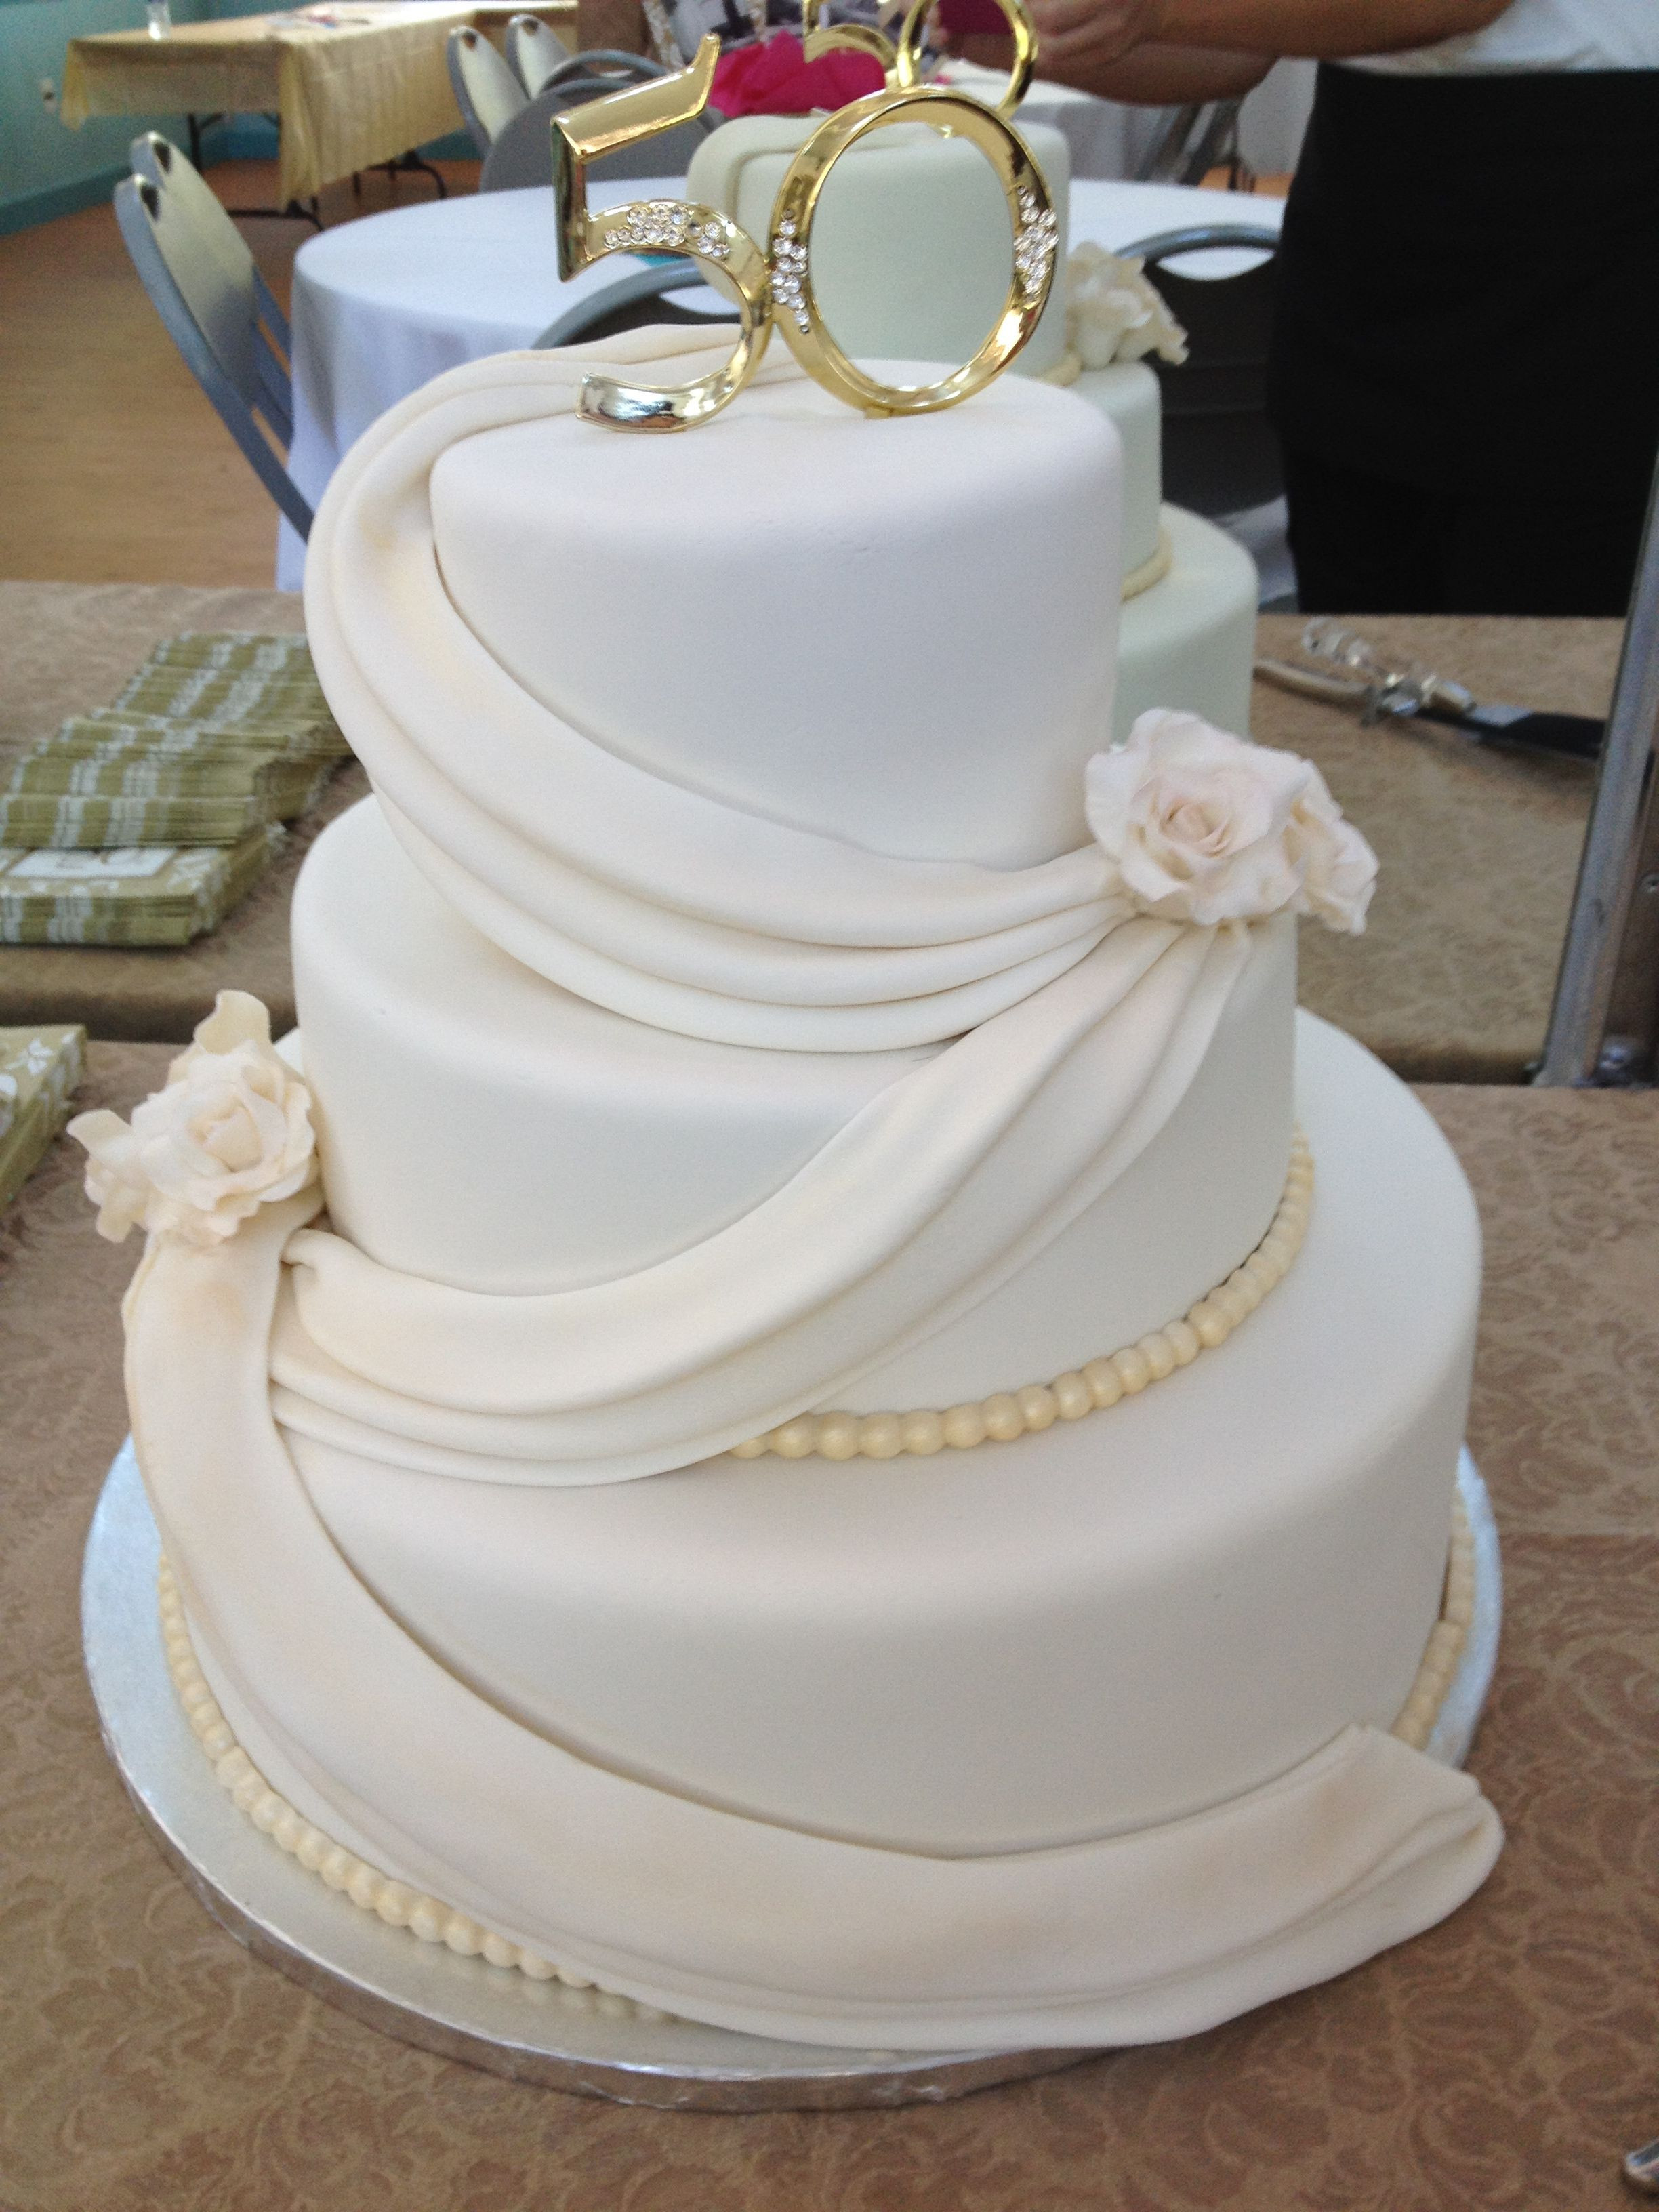 Wedding Cakes Pictures Pinterest
 50th Wedding Anniversary Cake Cakes